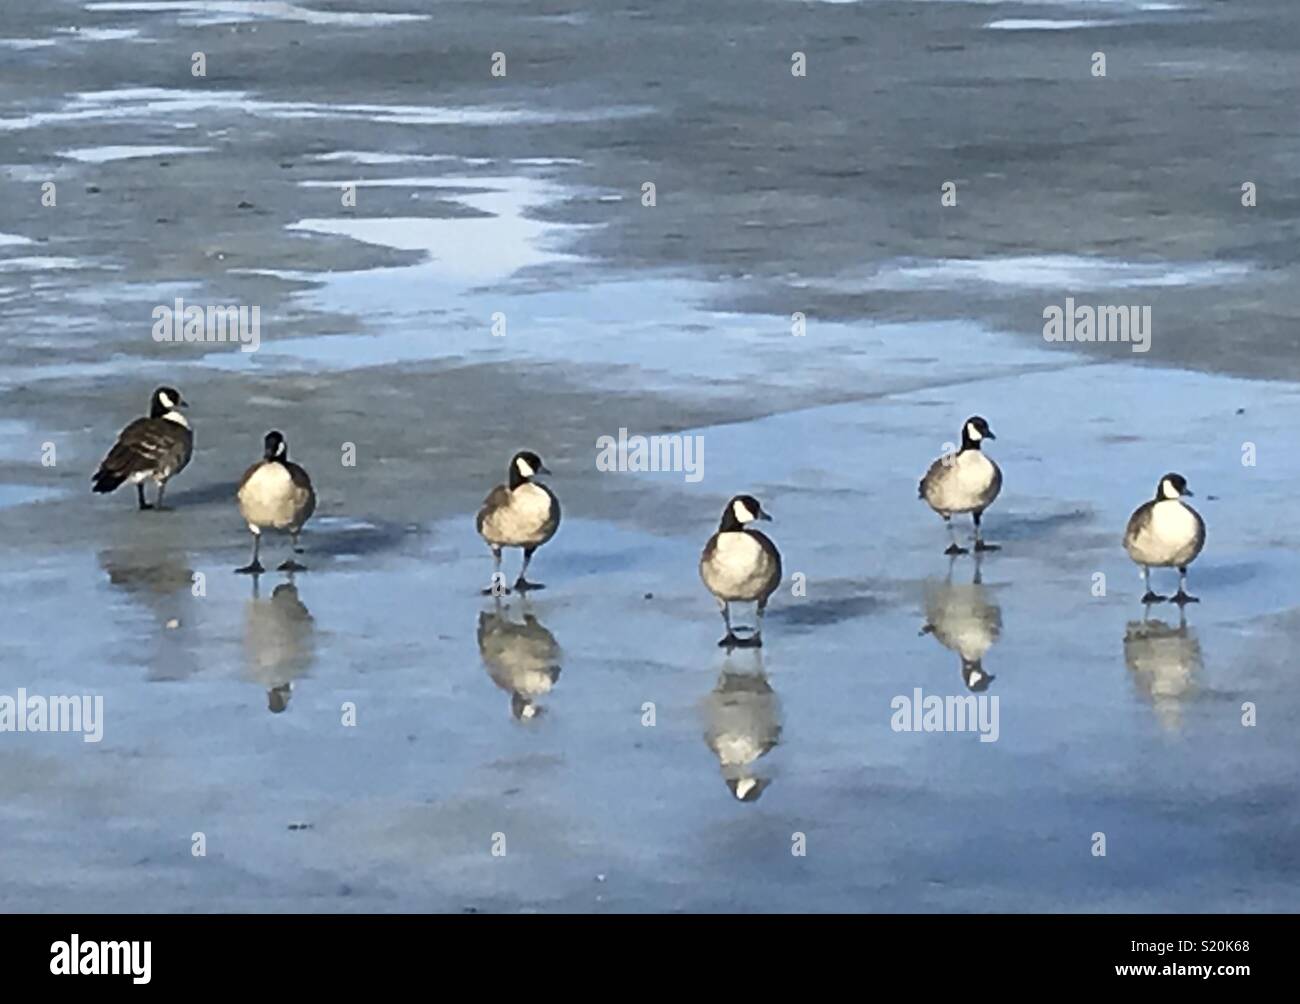 Six ducks standing on frozen lake ice Stock Photo